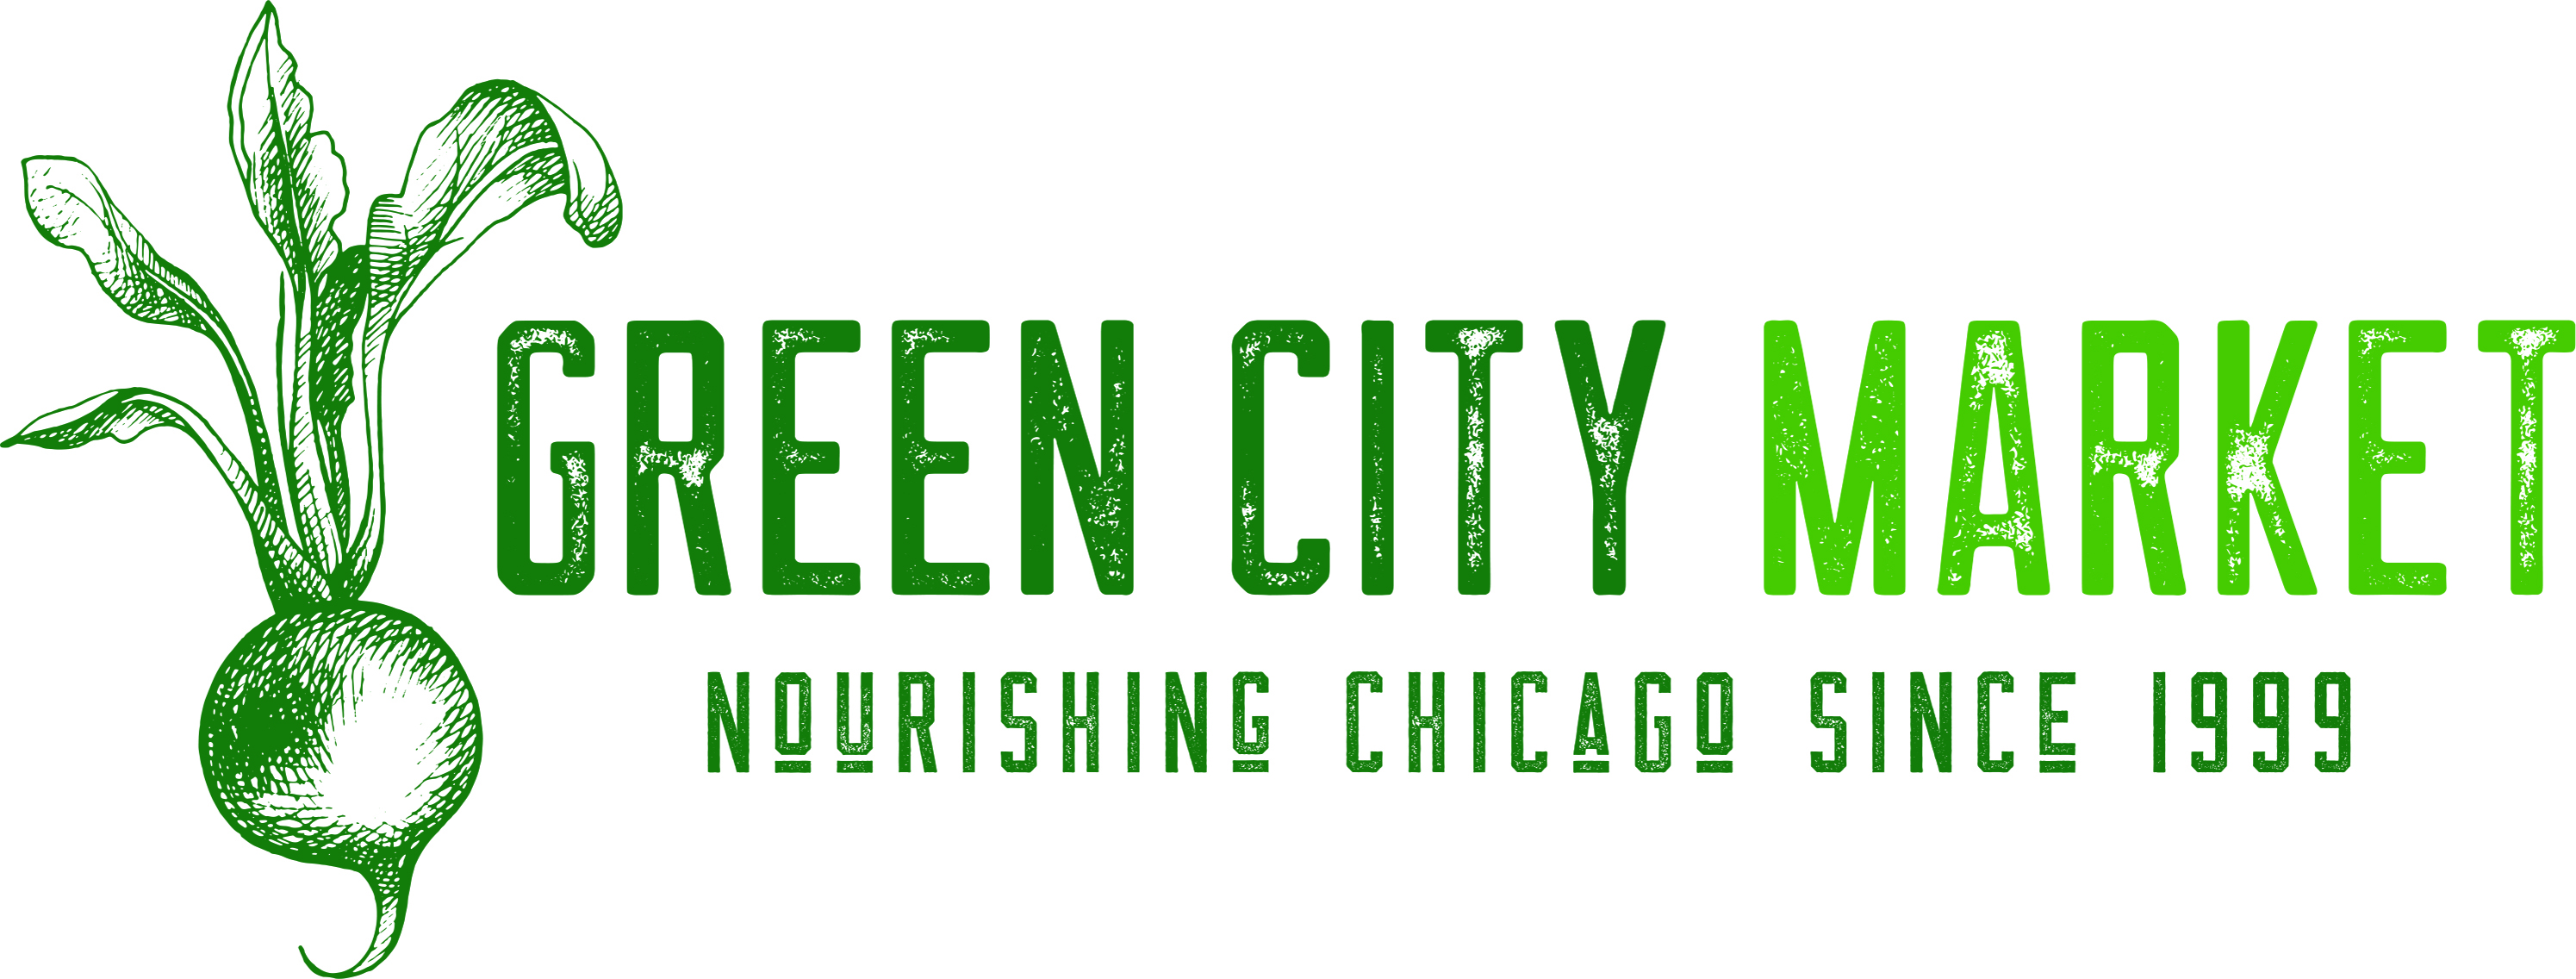 Chicago's Green City Market Program